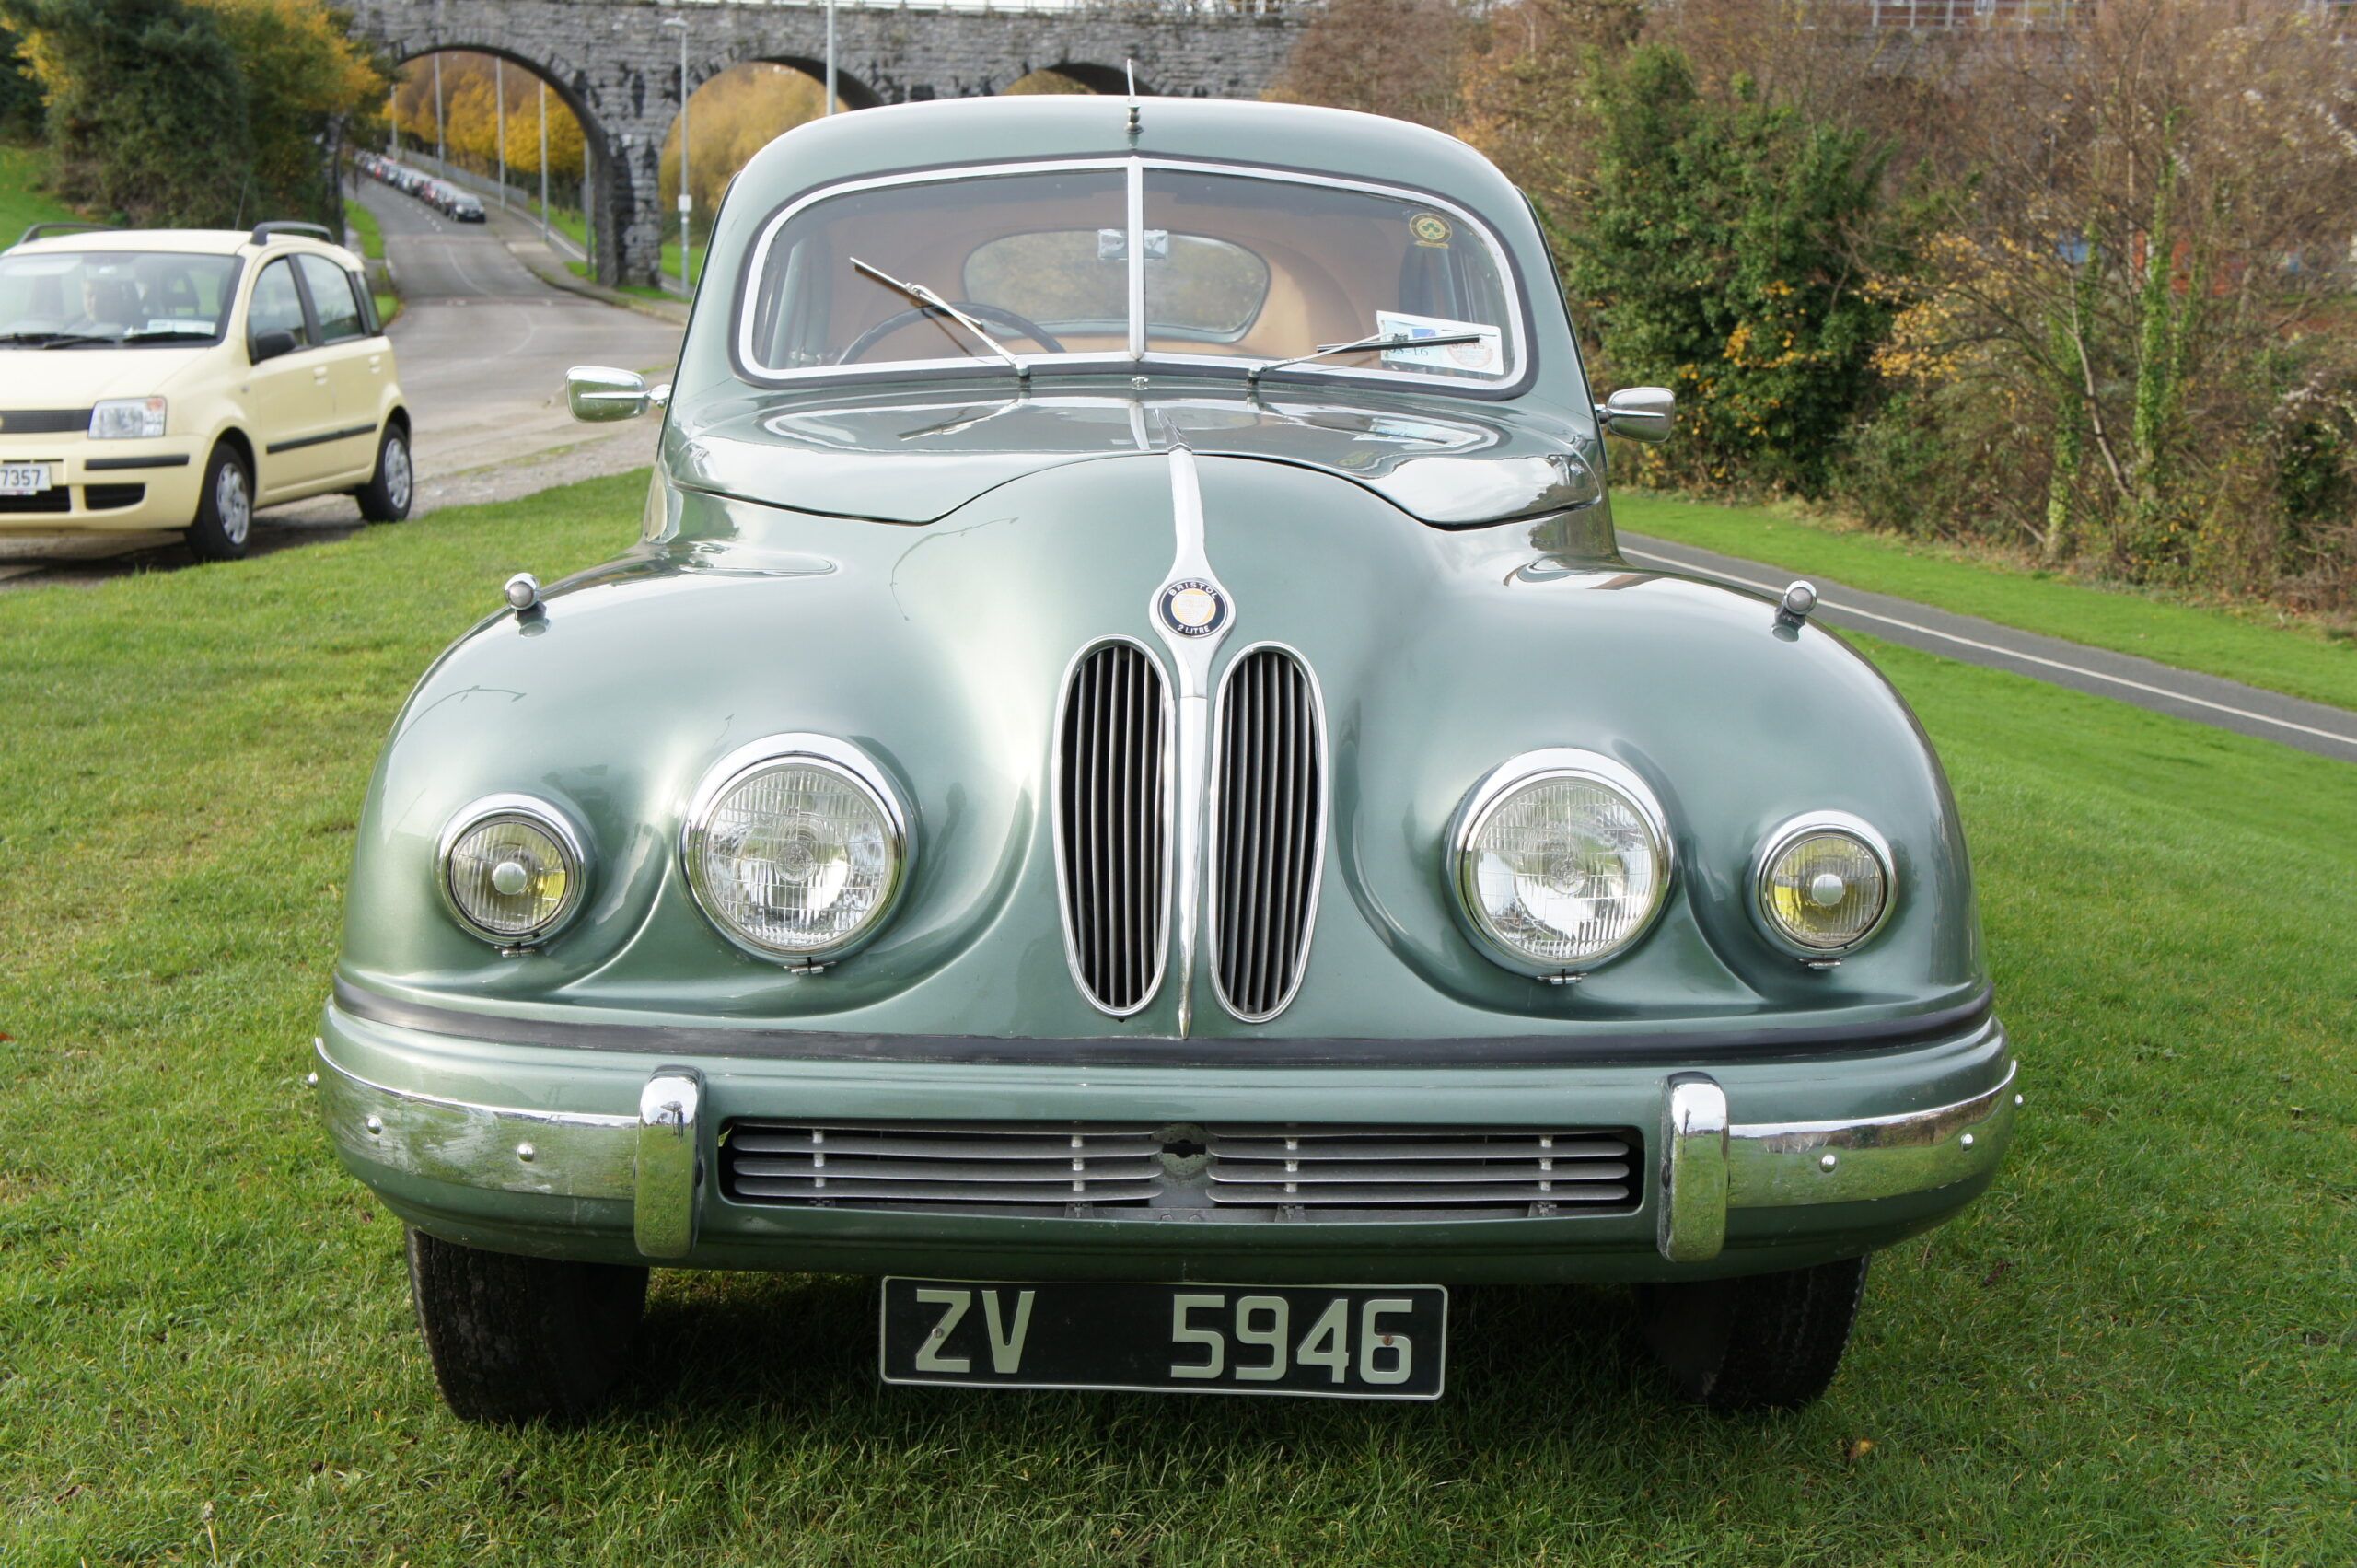 3,500 classic cars sold – David Golding | Season 3 – Episode 61